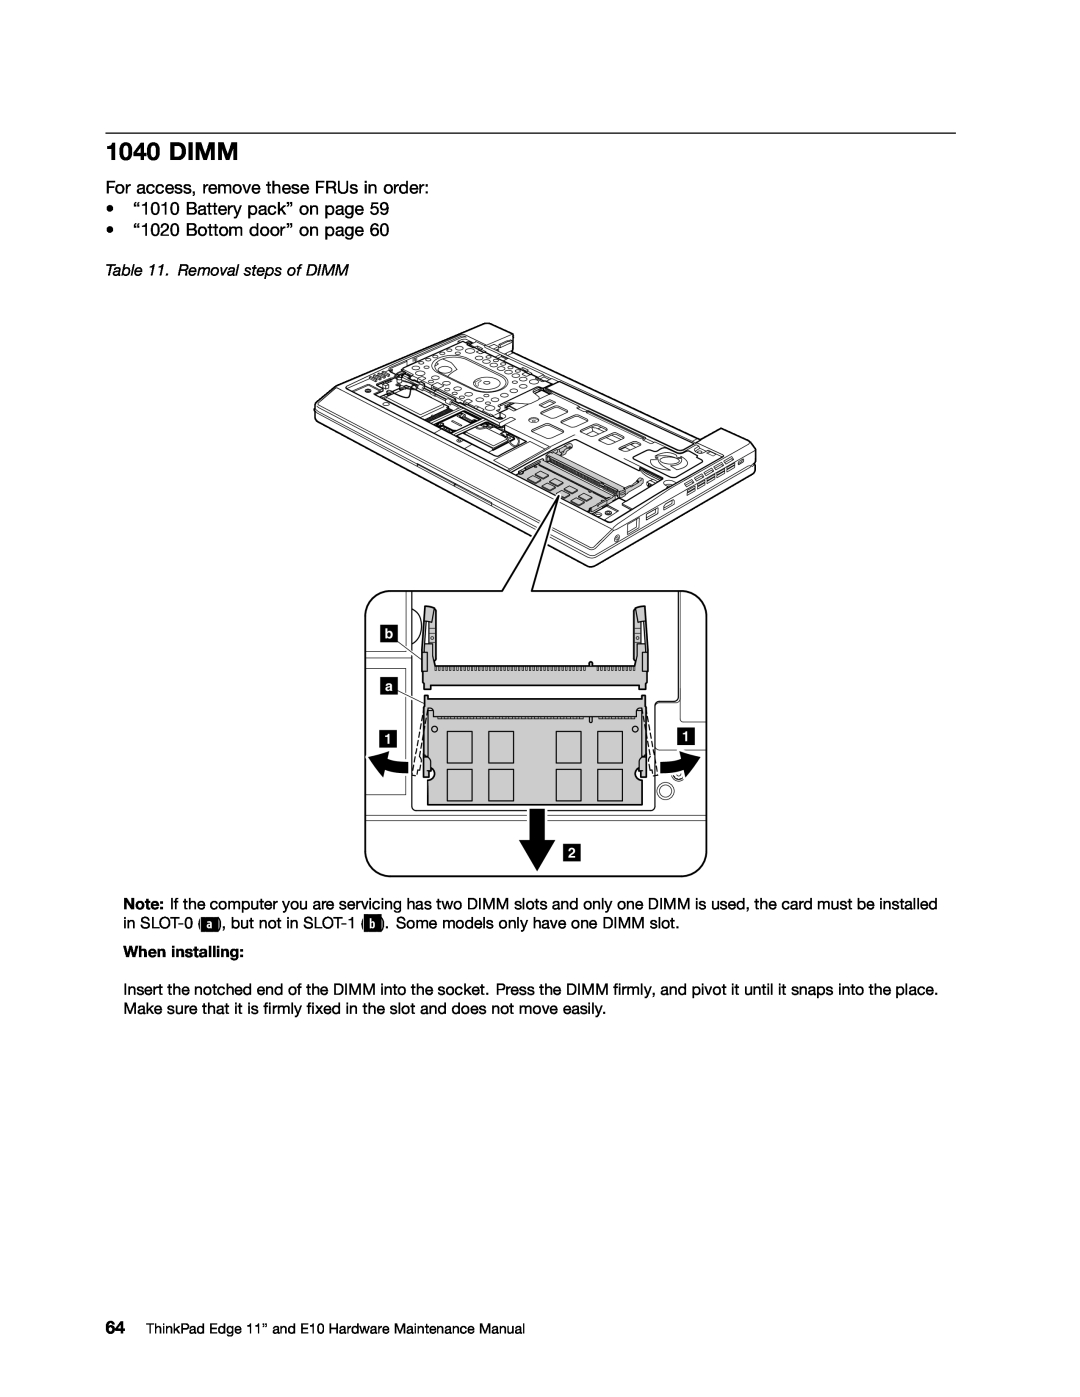 Lenovo E10 manual Dimm, Removal steps of DIMM 